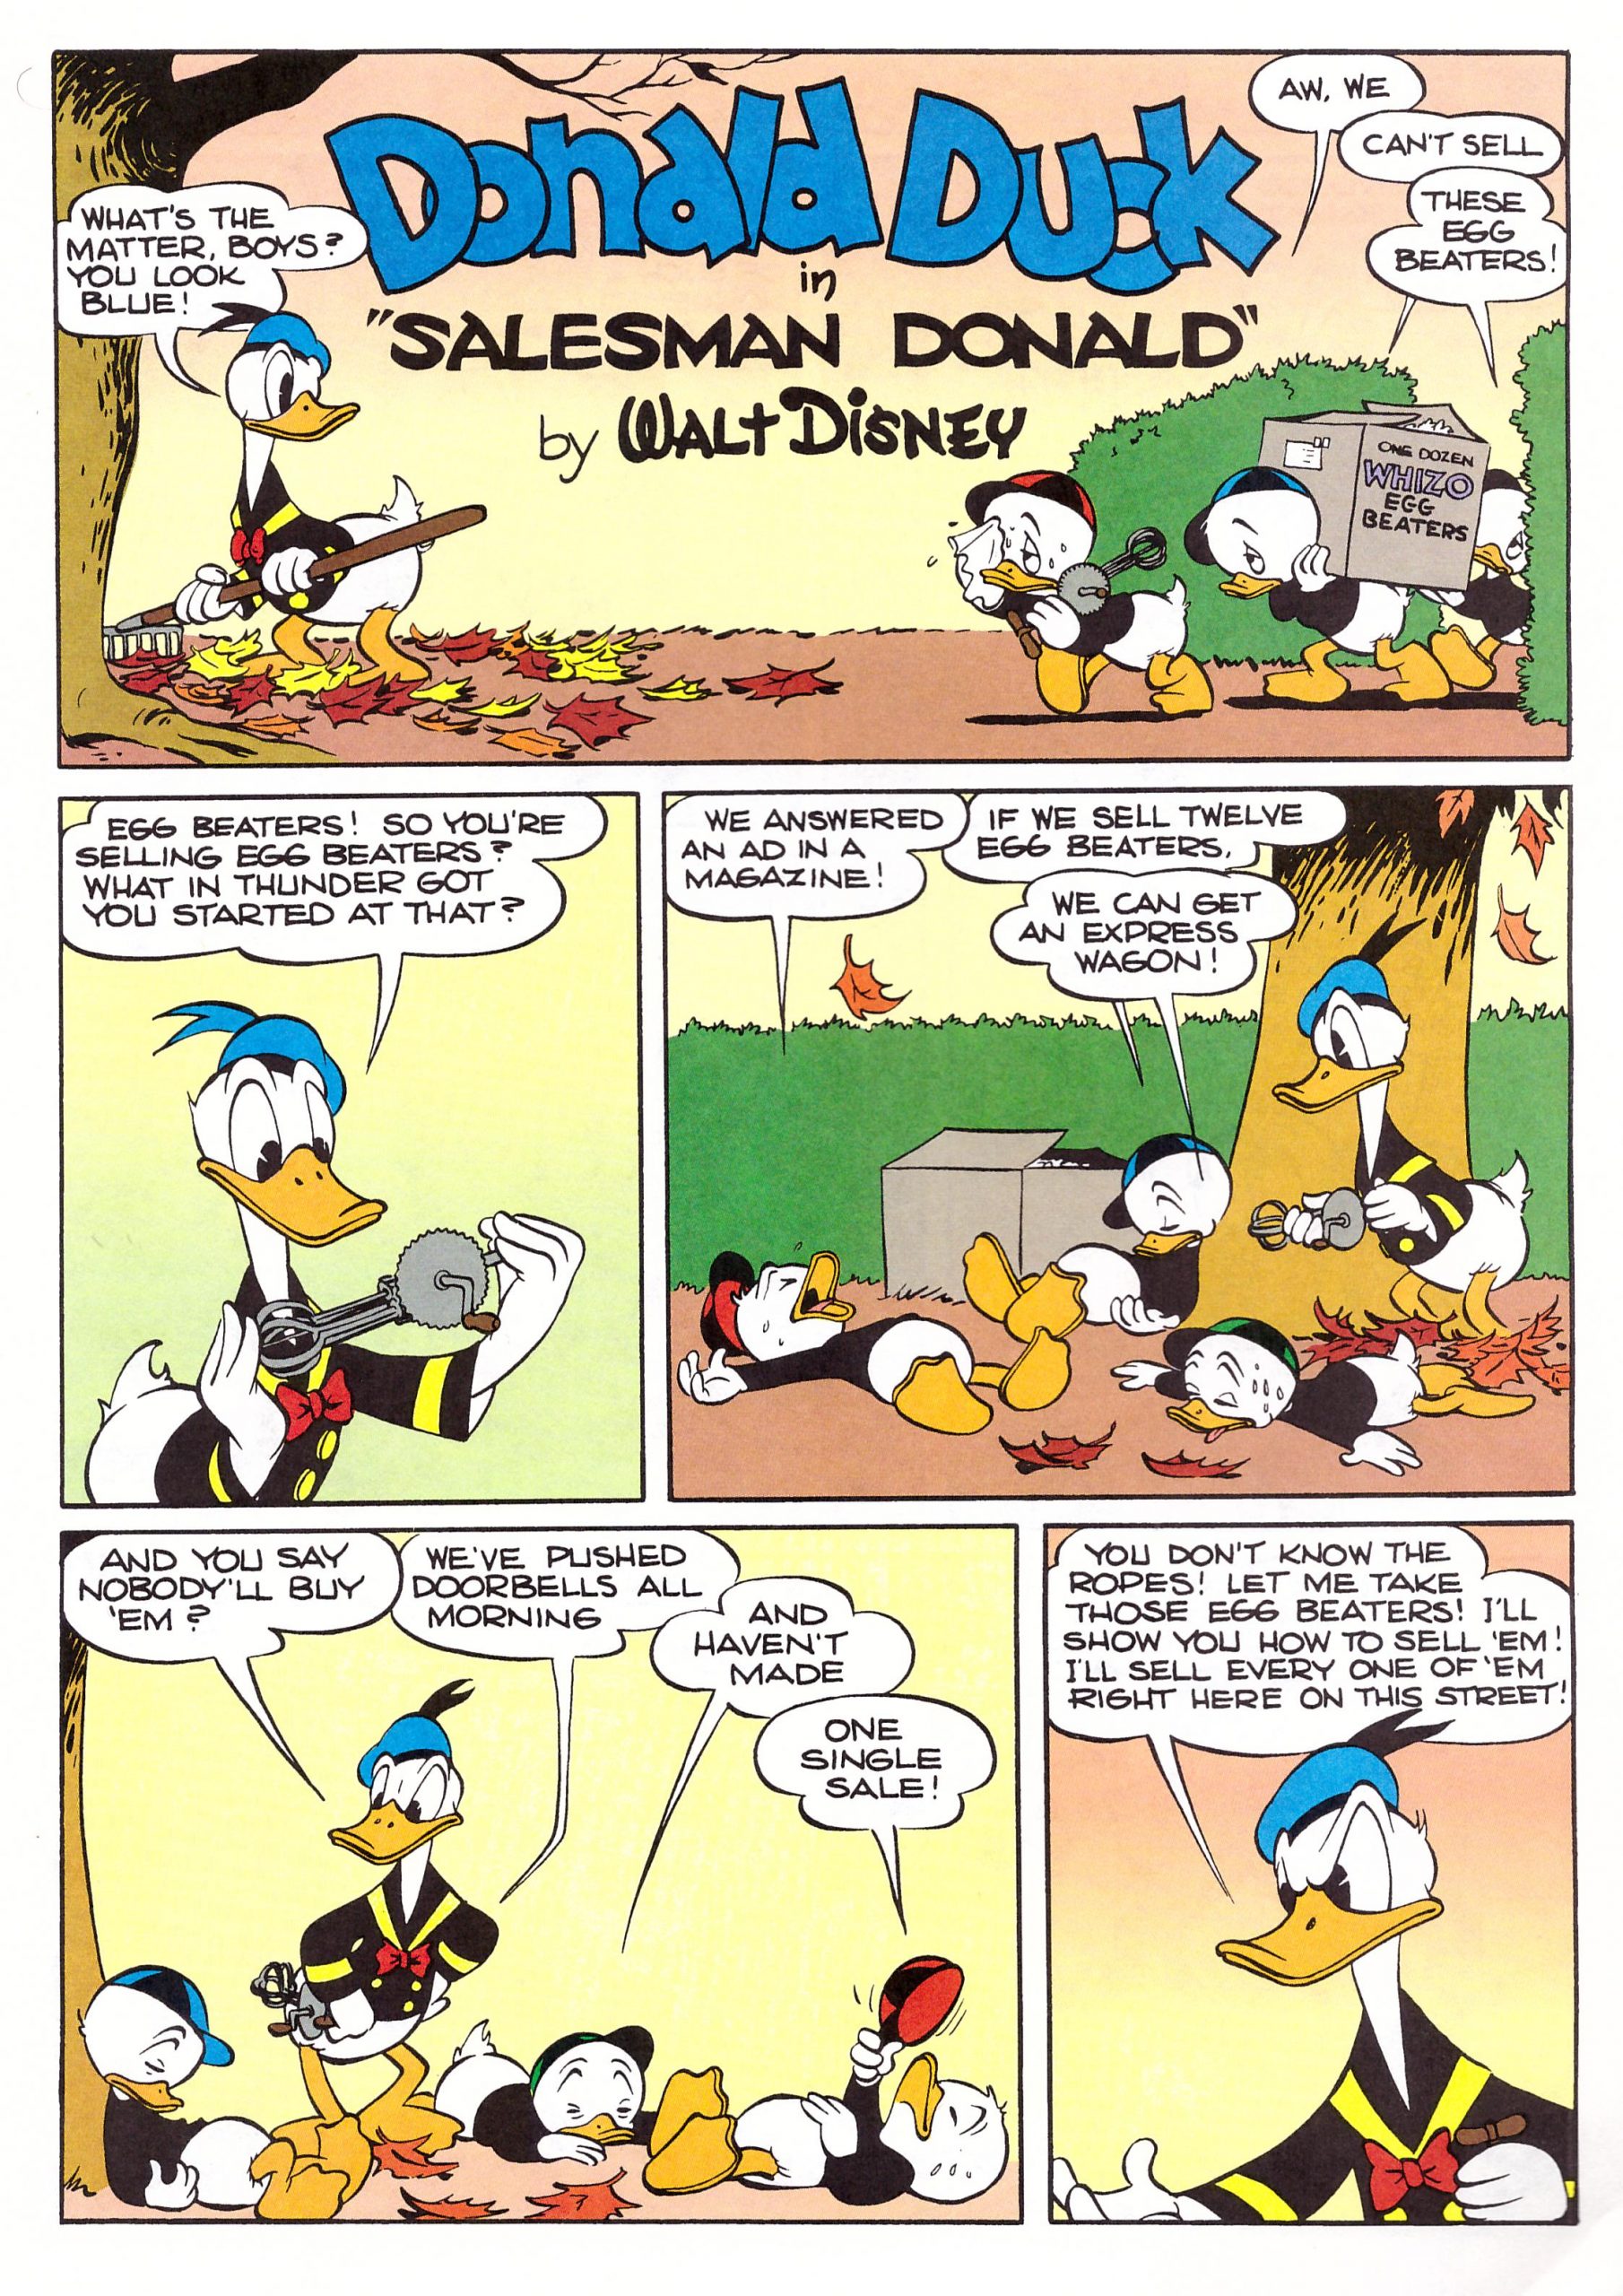 Walt Disney Comics & Stories by Carl Barks 2 review